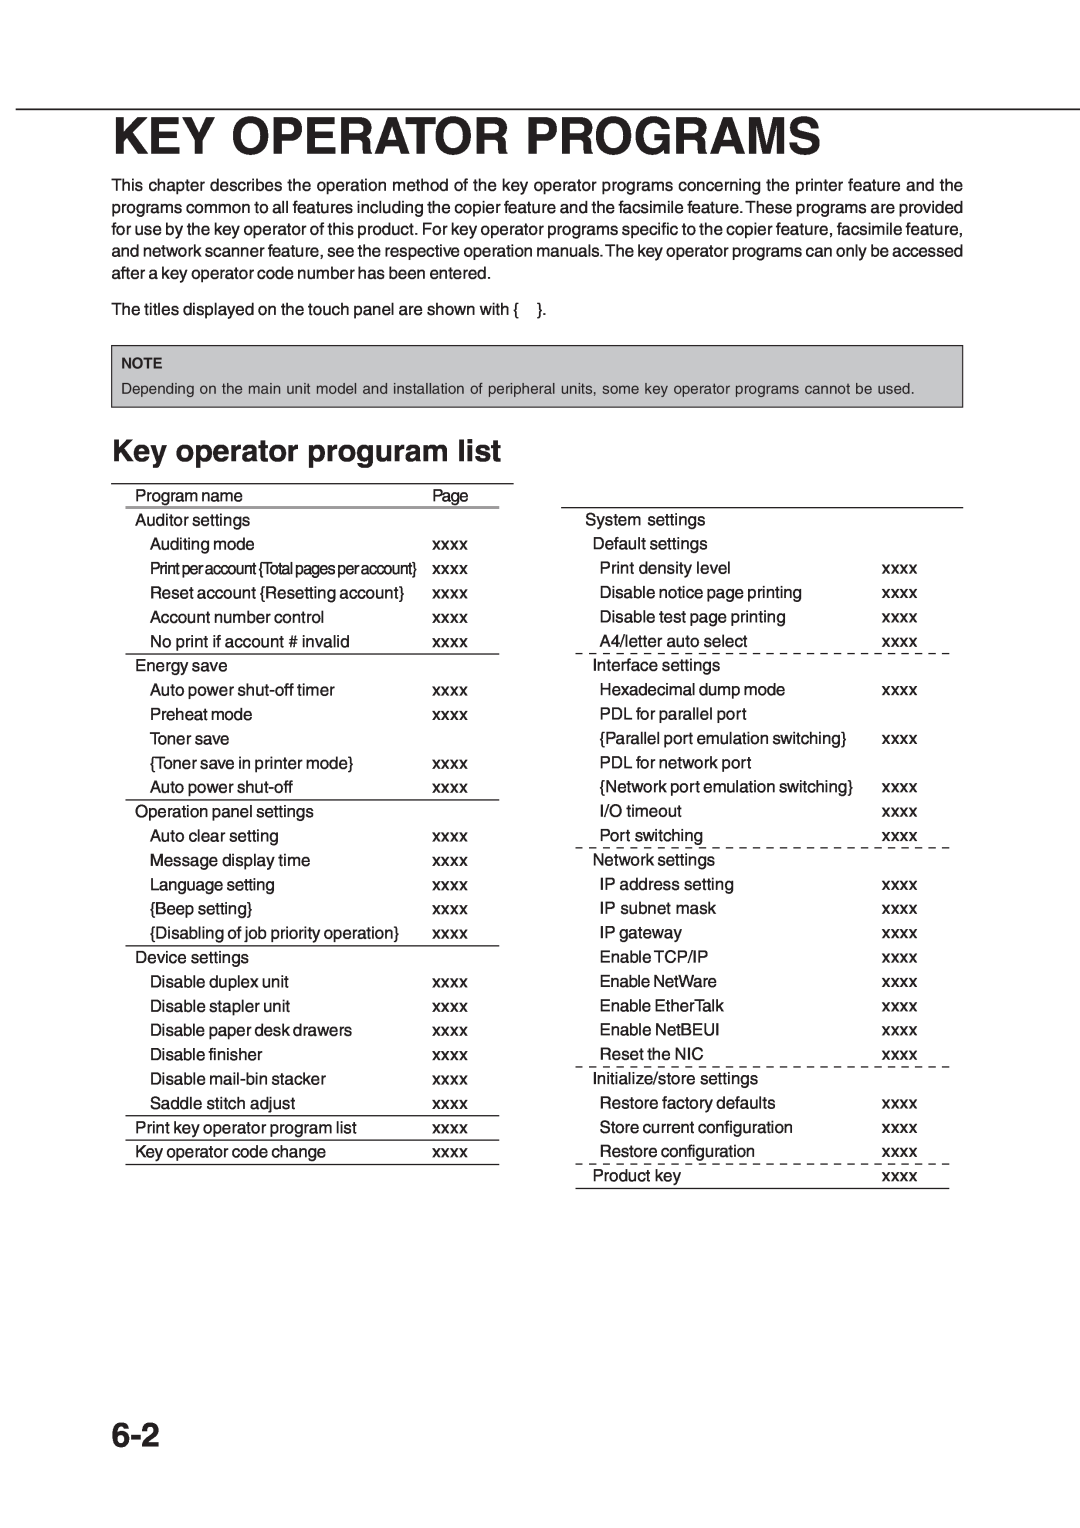 Sharp AR_M280, AR-350 operation manual Key Operator Programs, Key operator proguram list 